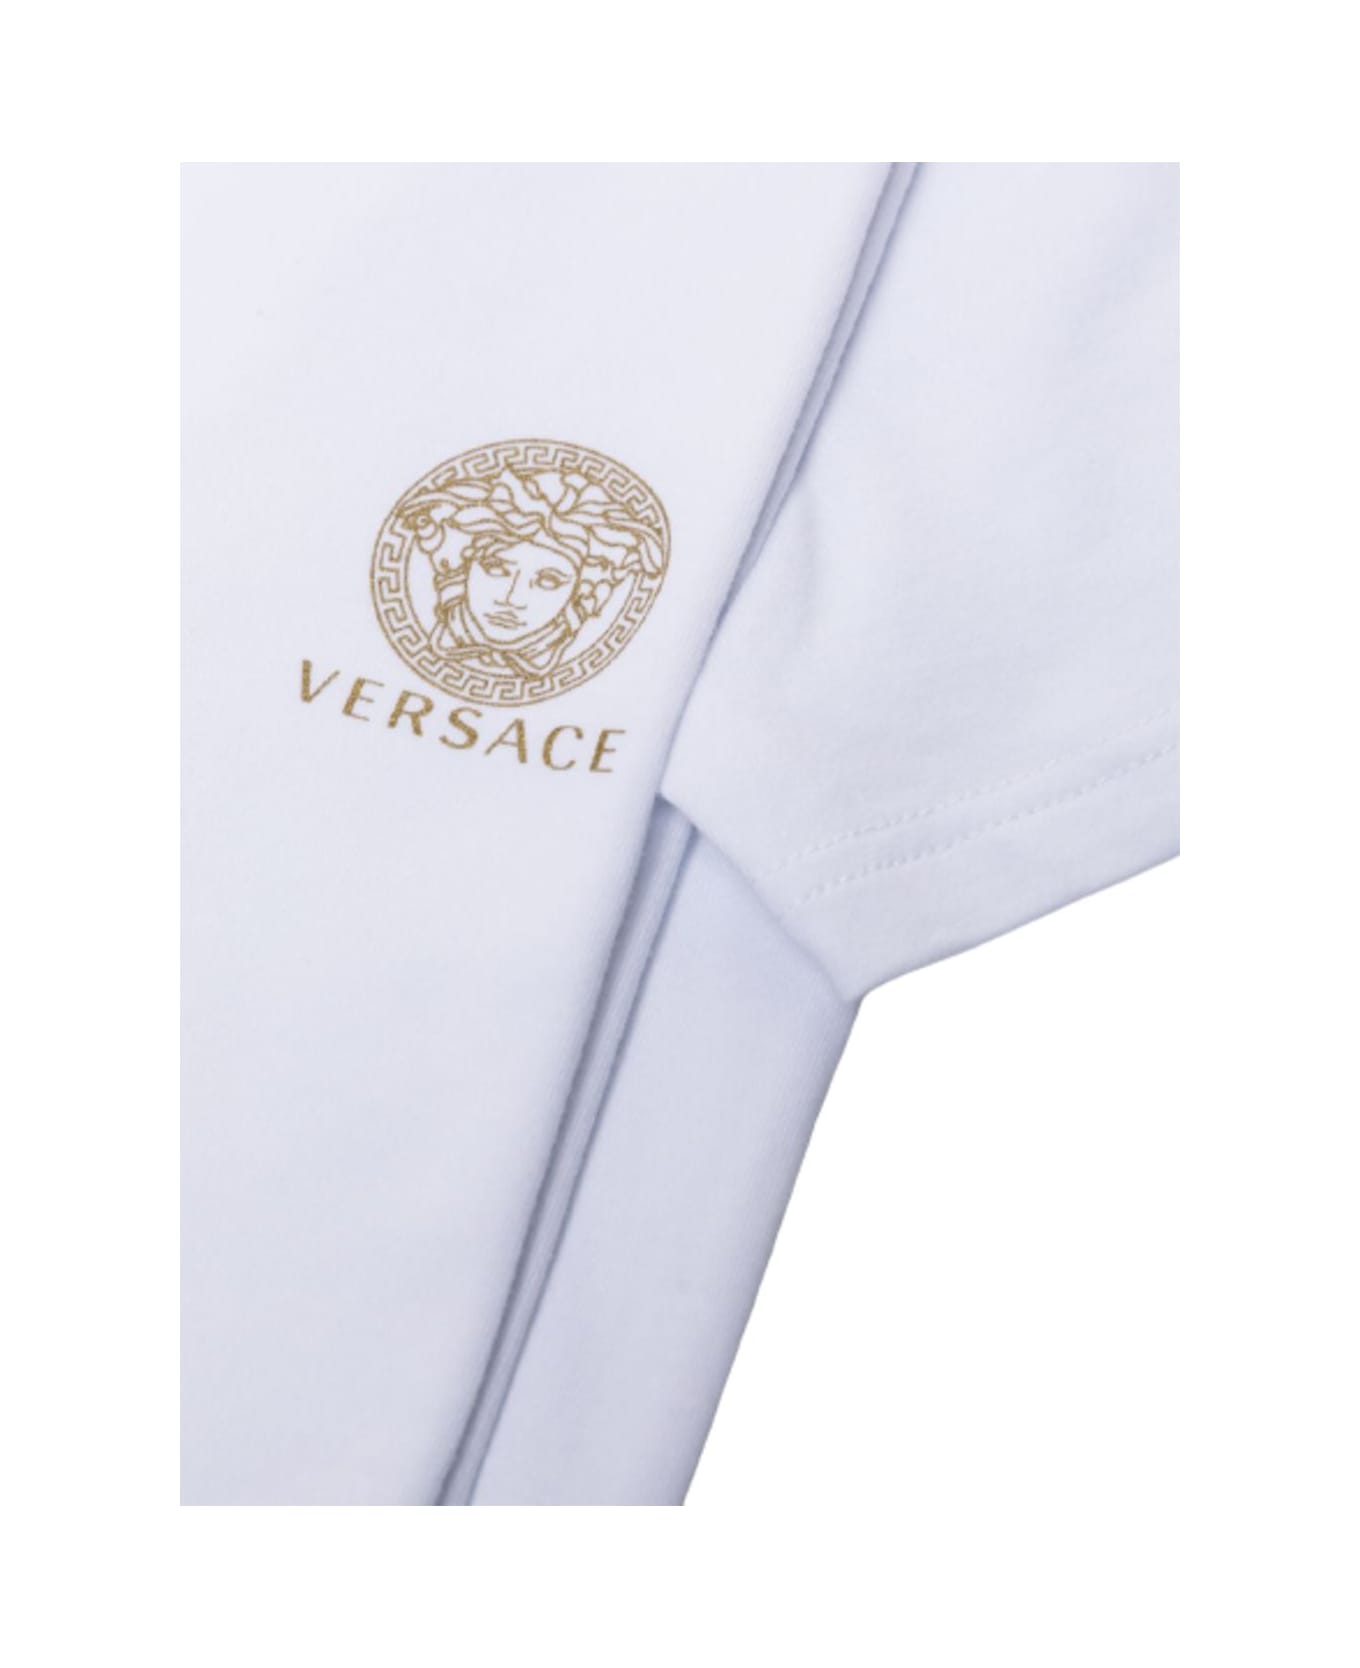 Versace Man's Set Of Two White Cotton Crew Neck T-shirts With Logo - Bianco ottico